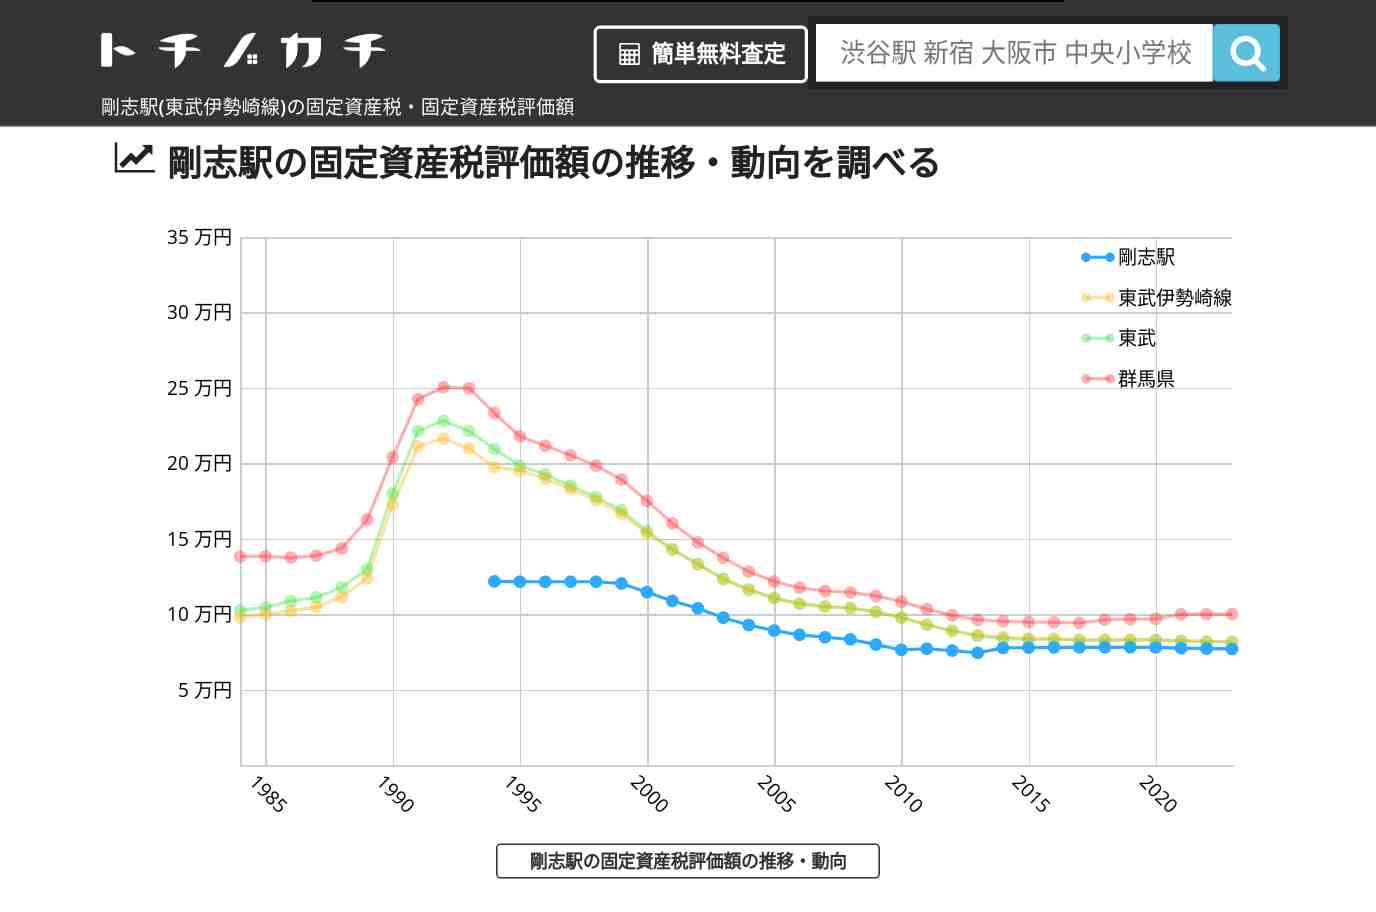 剛志駅(東武伊勢崎線)の固定資産税・固定資産税評価額 | トチノカチ